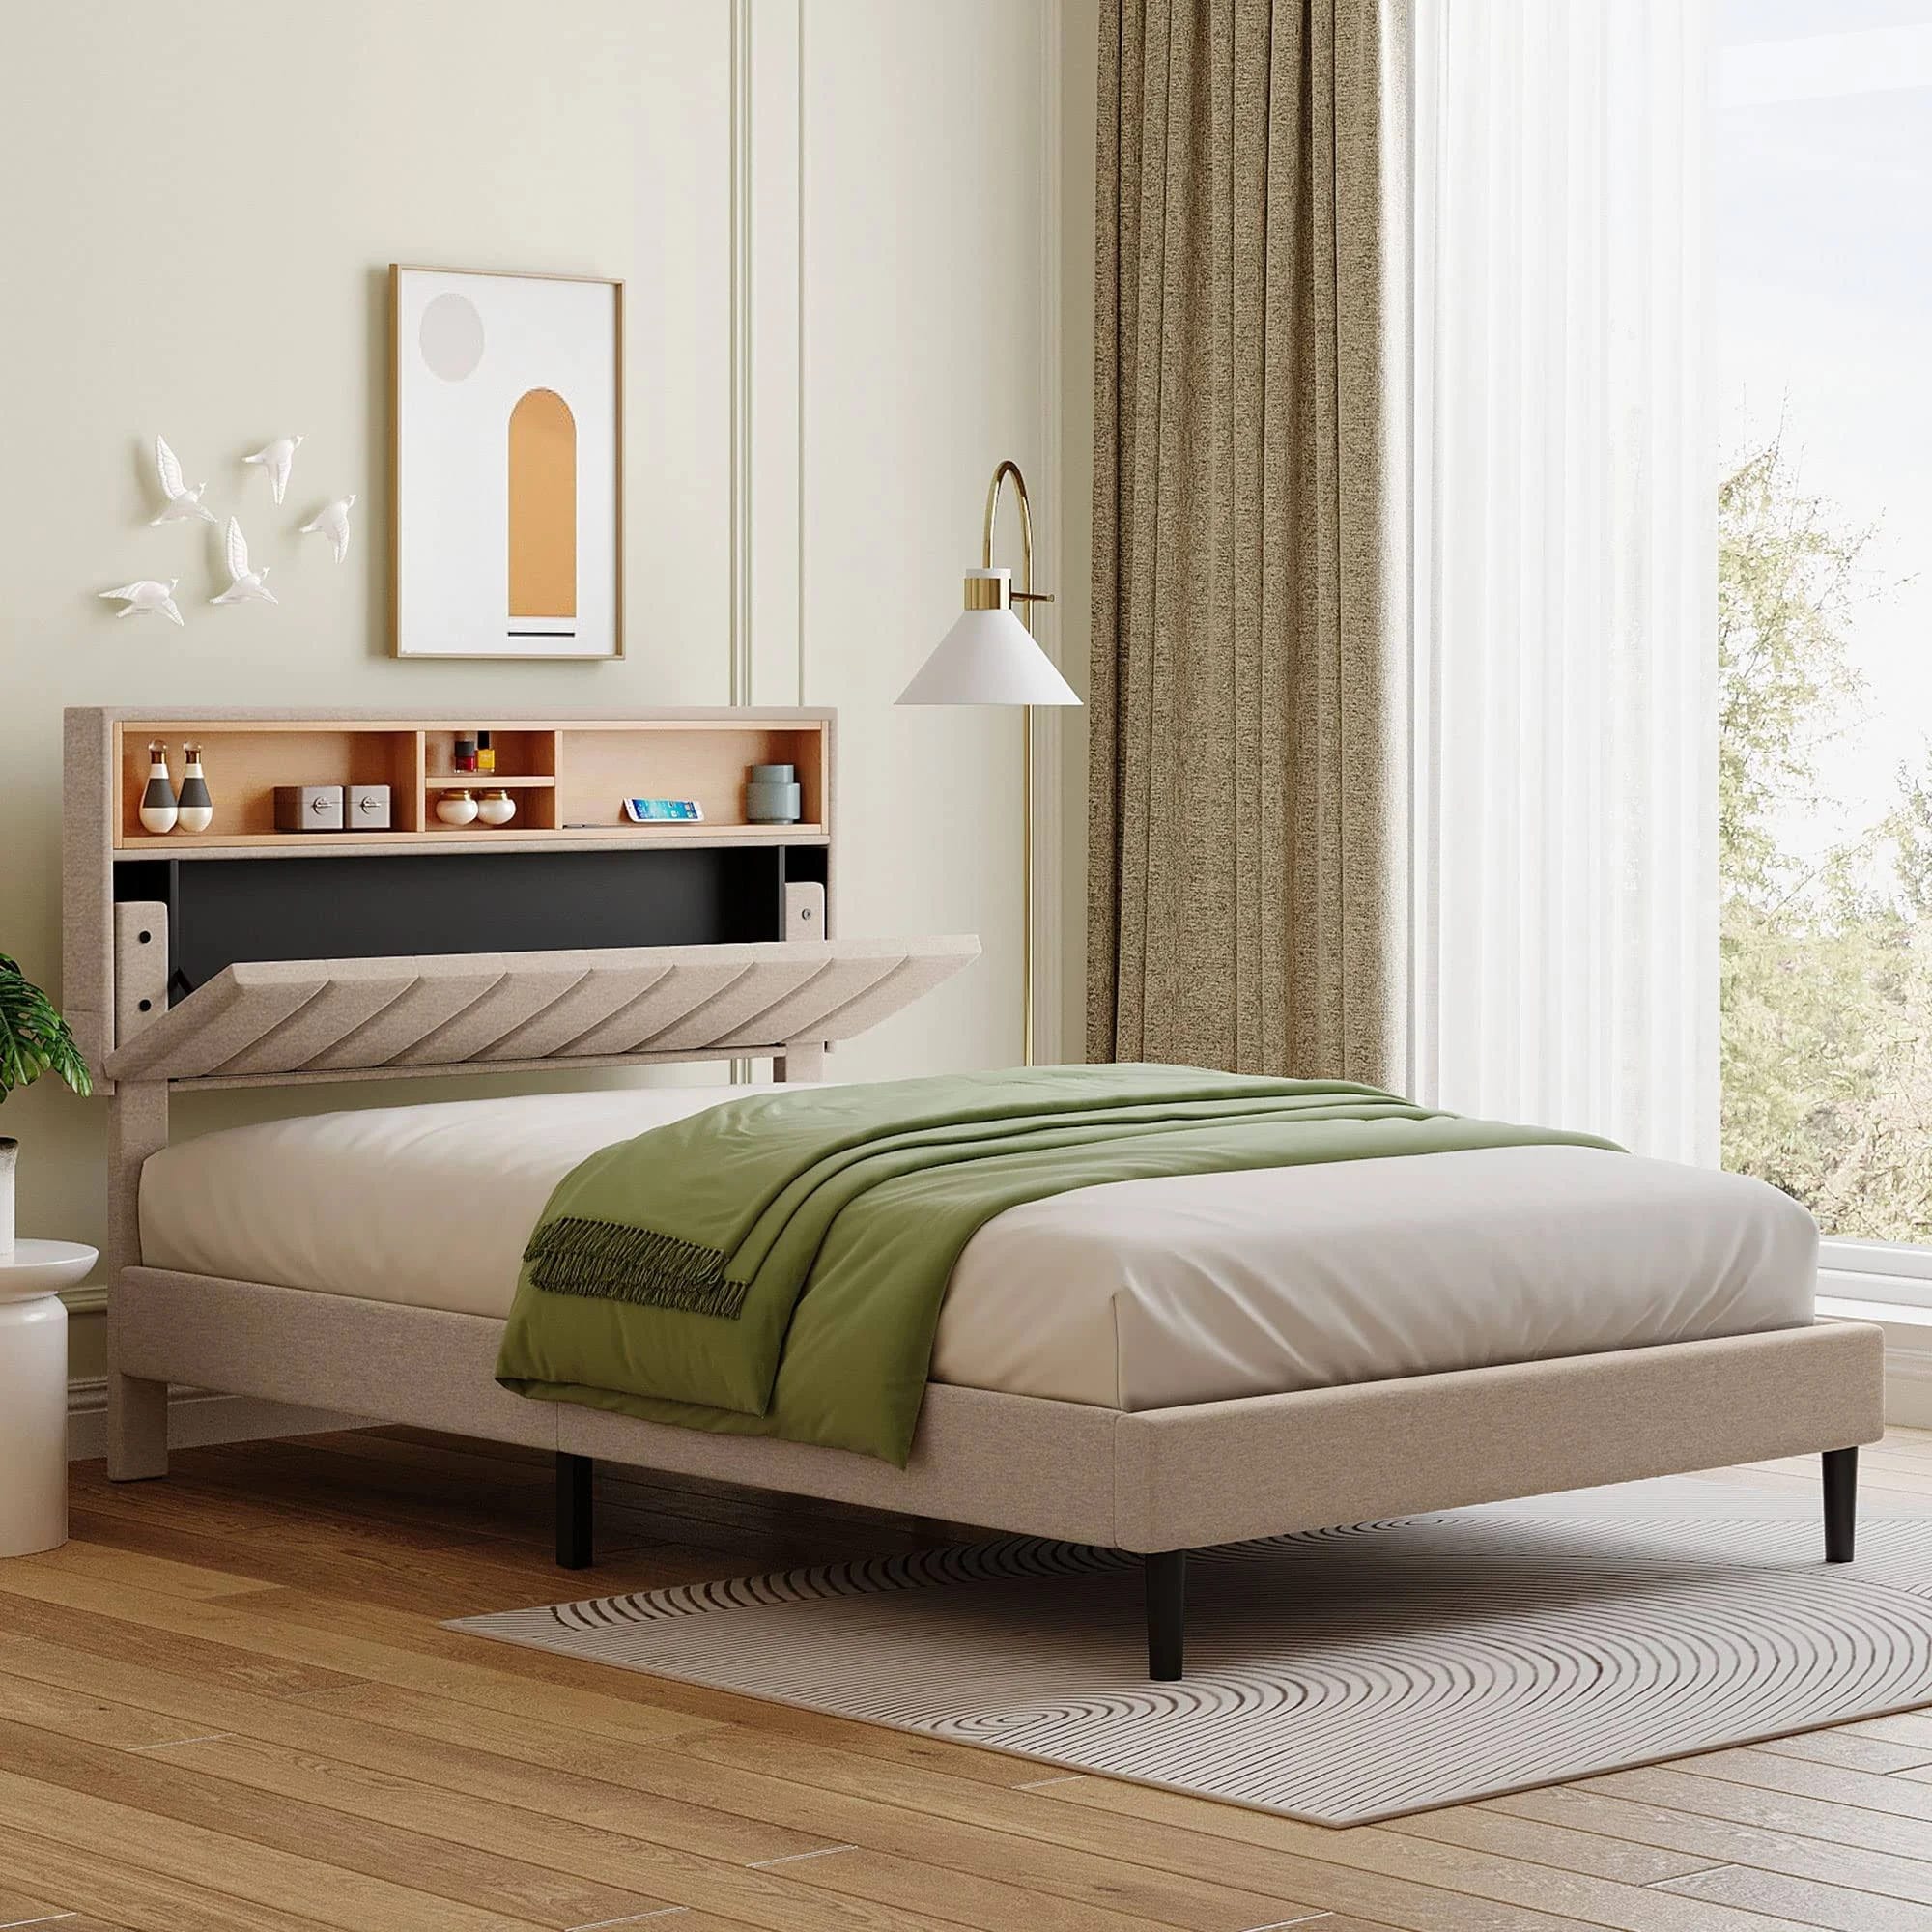 Modern Upholstered Bed Frame with Storage and USB Integration | Image